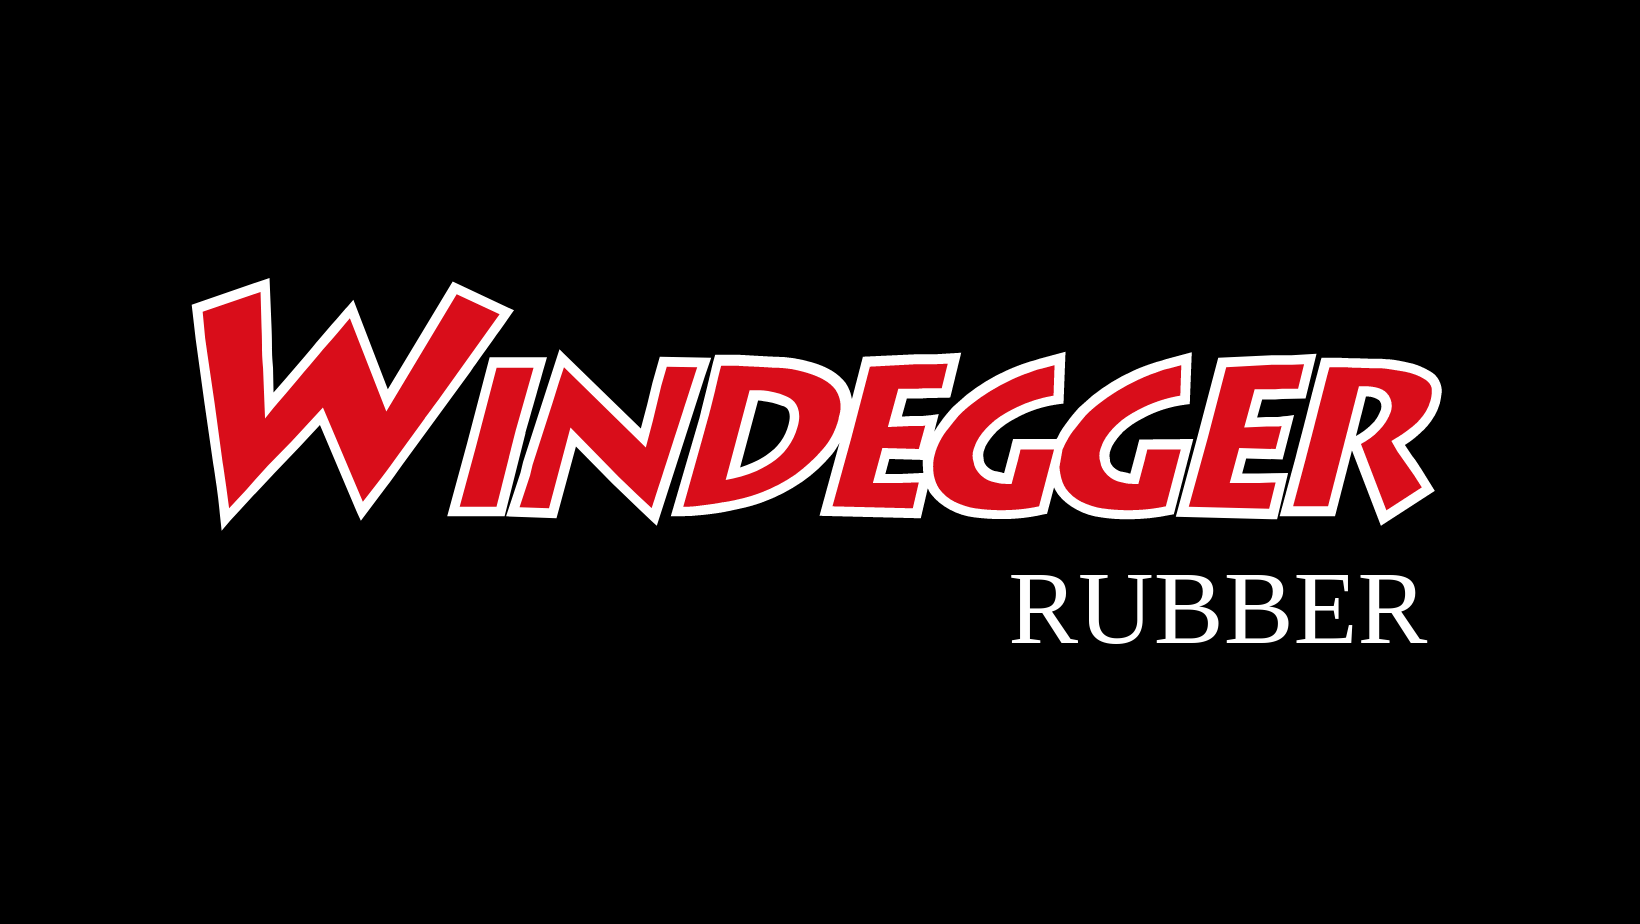 Windegger Rubber GmbH